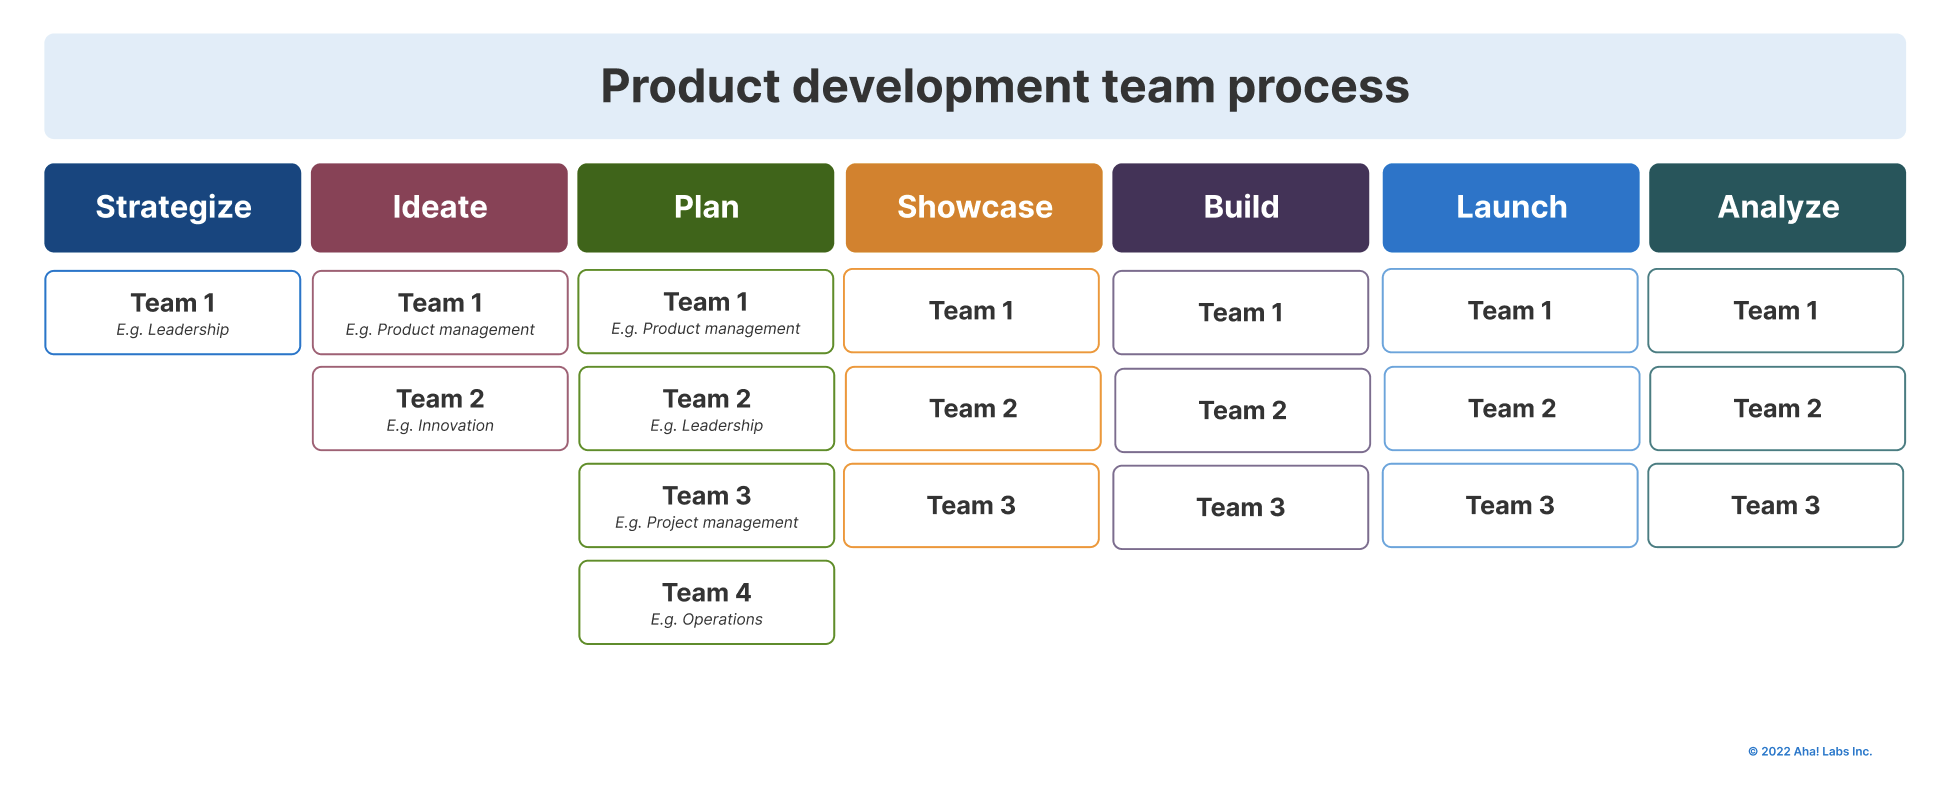 Product development team process template / Image